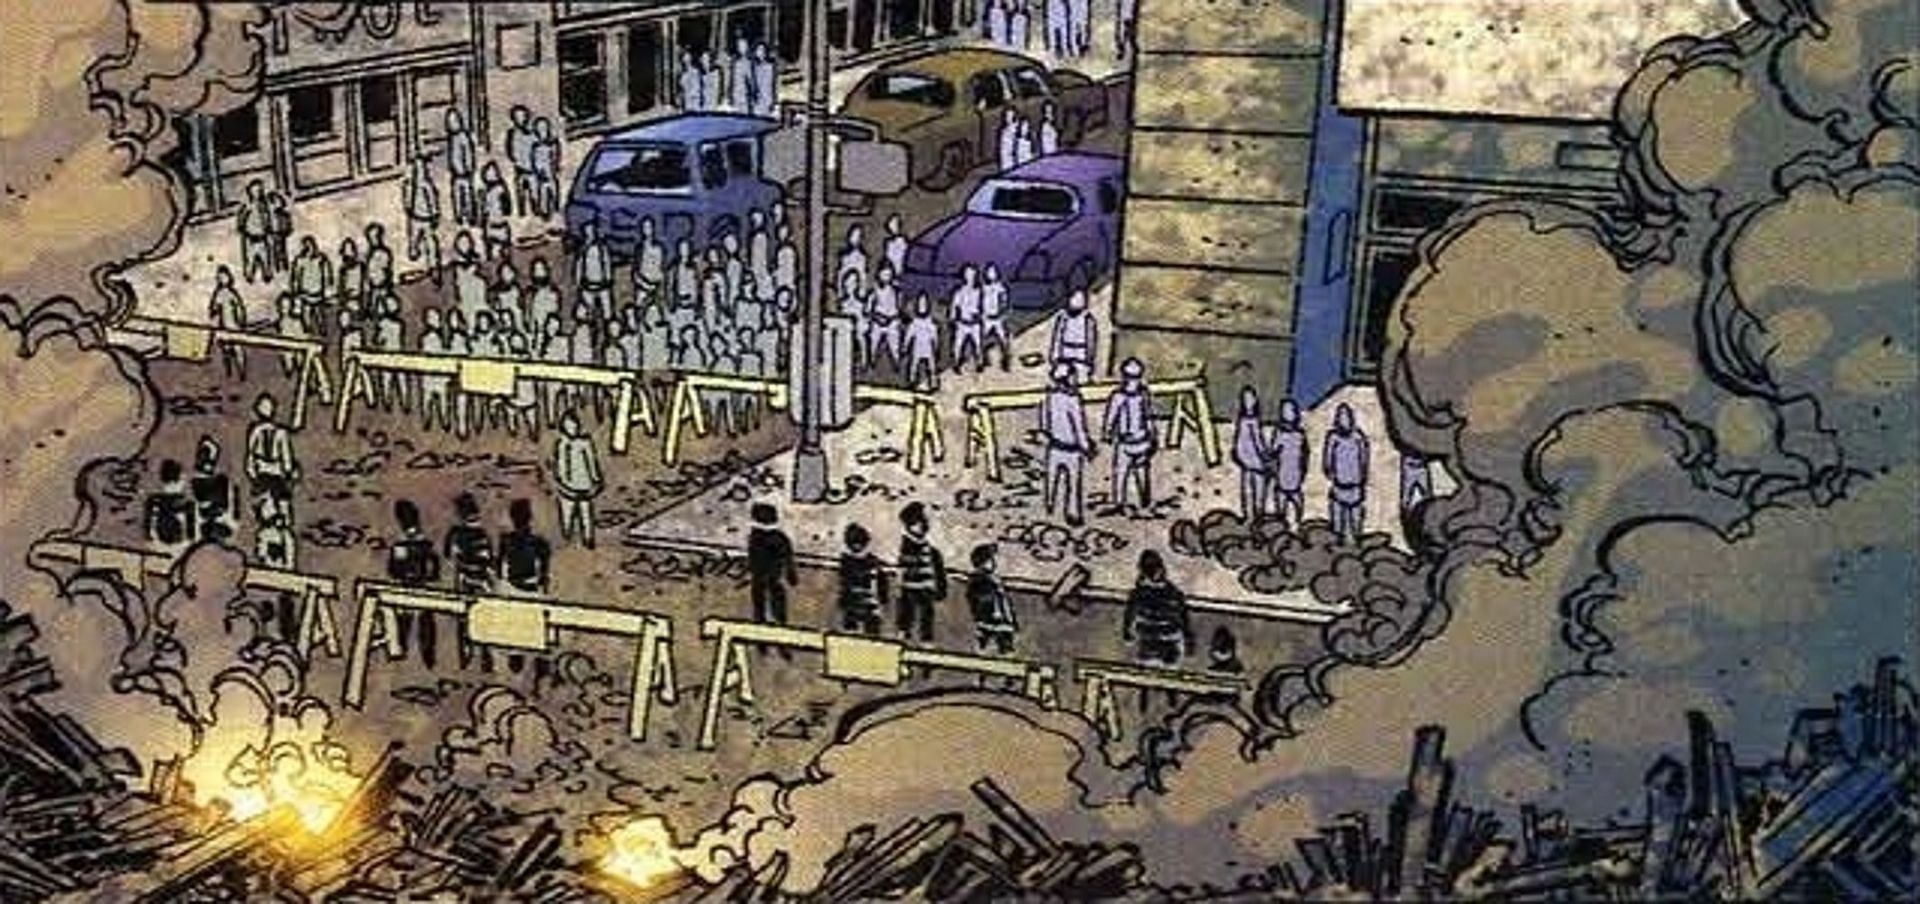 A Marvel Comics depiction of Ground Zero (Image via Marvel Comics)